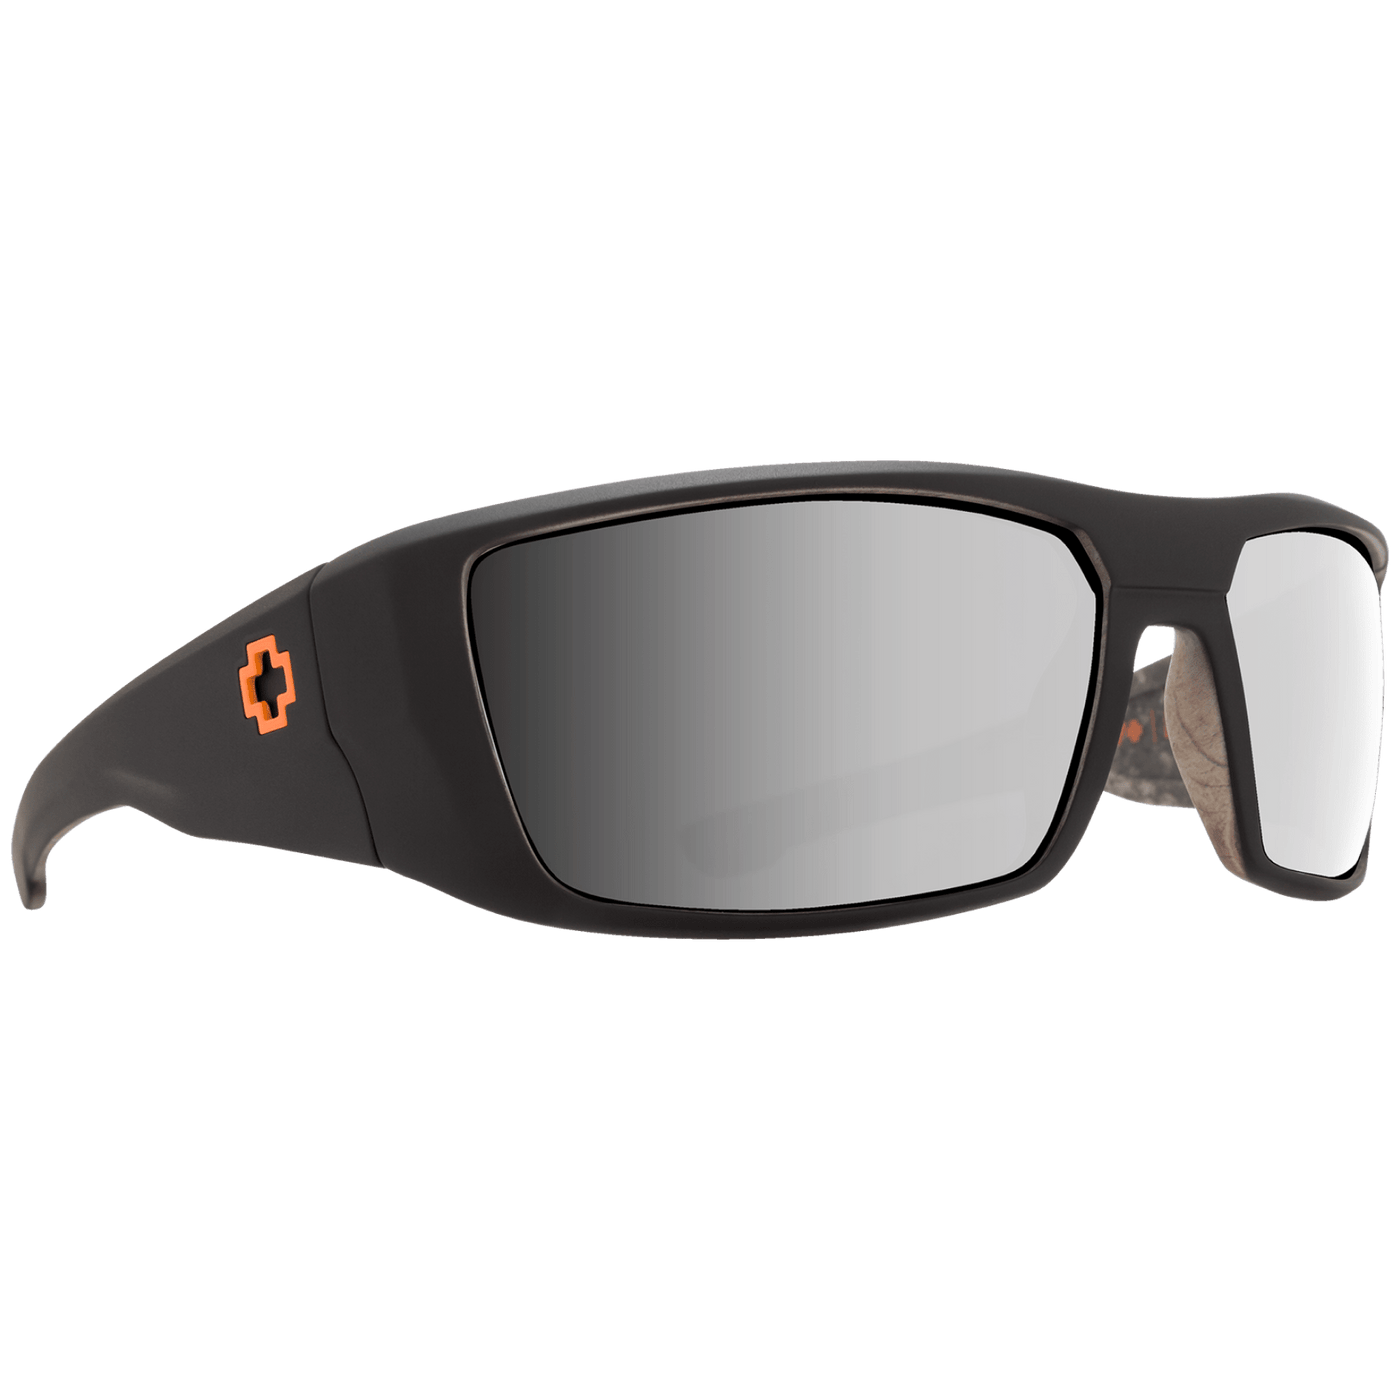 SPY DIRK Polarized Sunglasses, Happy Lens - Decoy Realtree 8Lines Shop - Fast Shipping